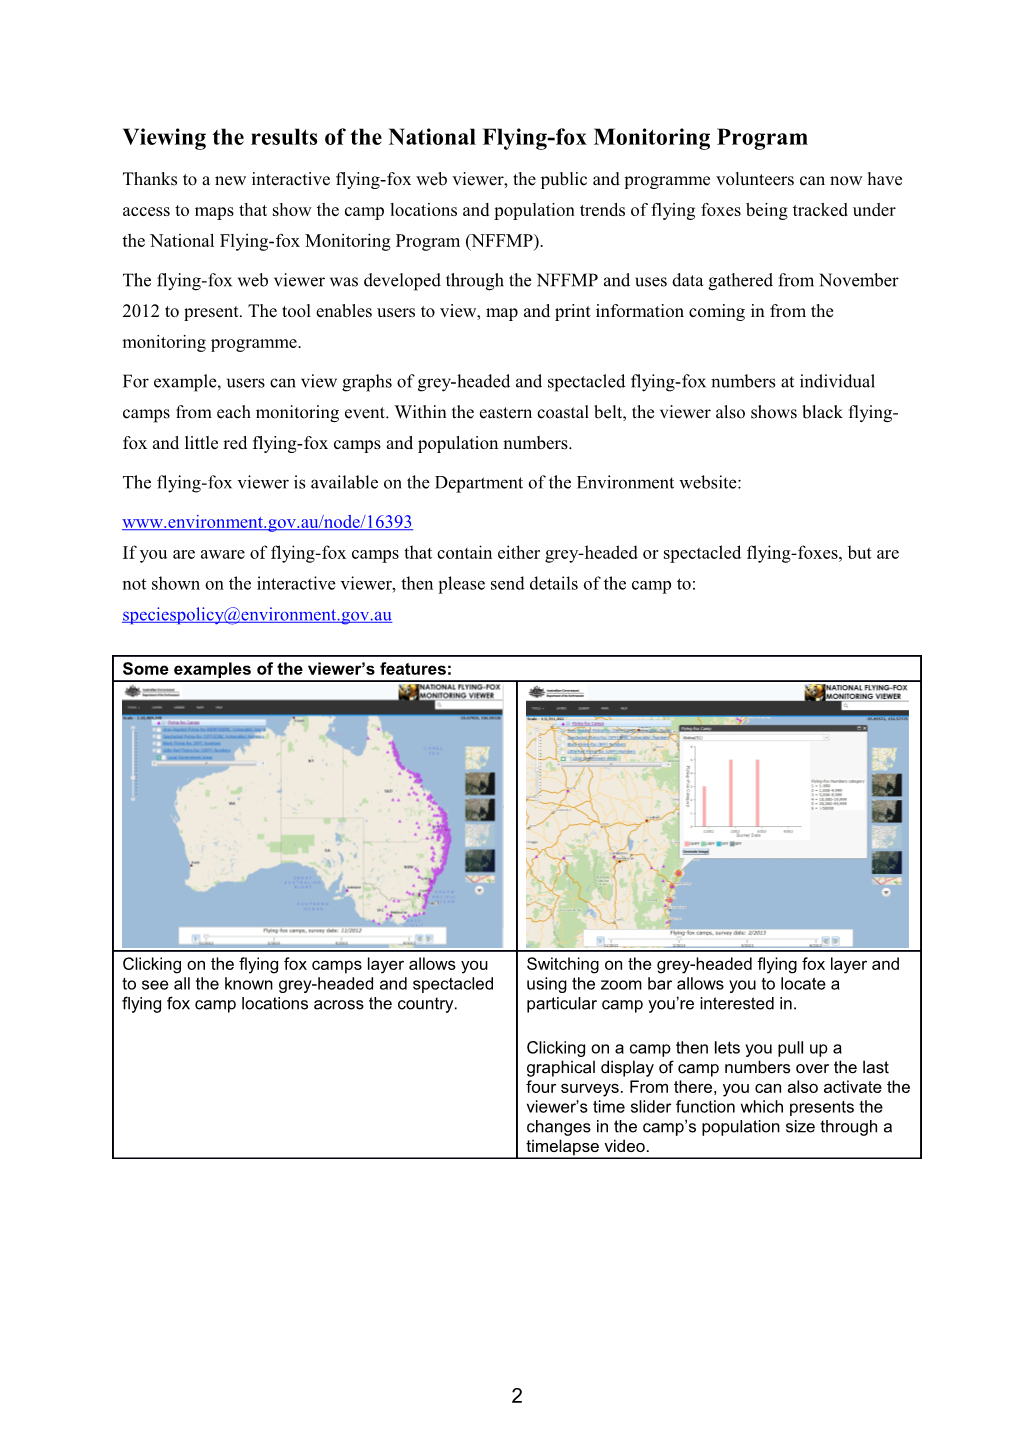 THE MONITOR the National Flying-Fox Monitoring Program Newsletterissue 02 / June 2014